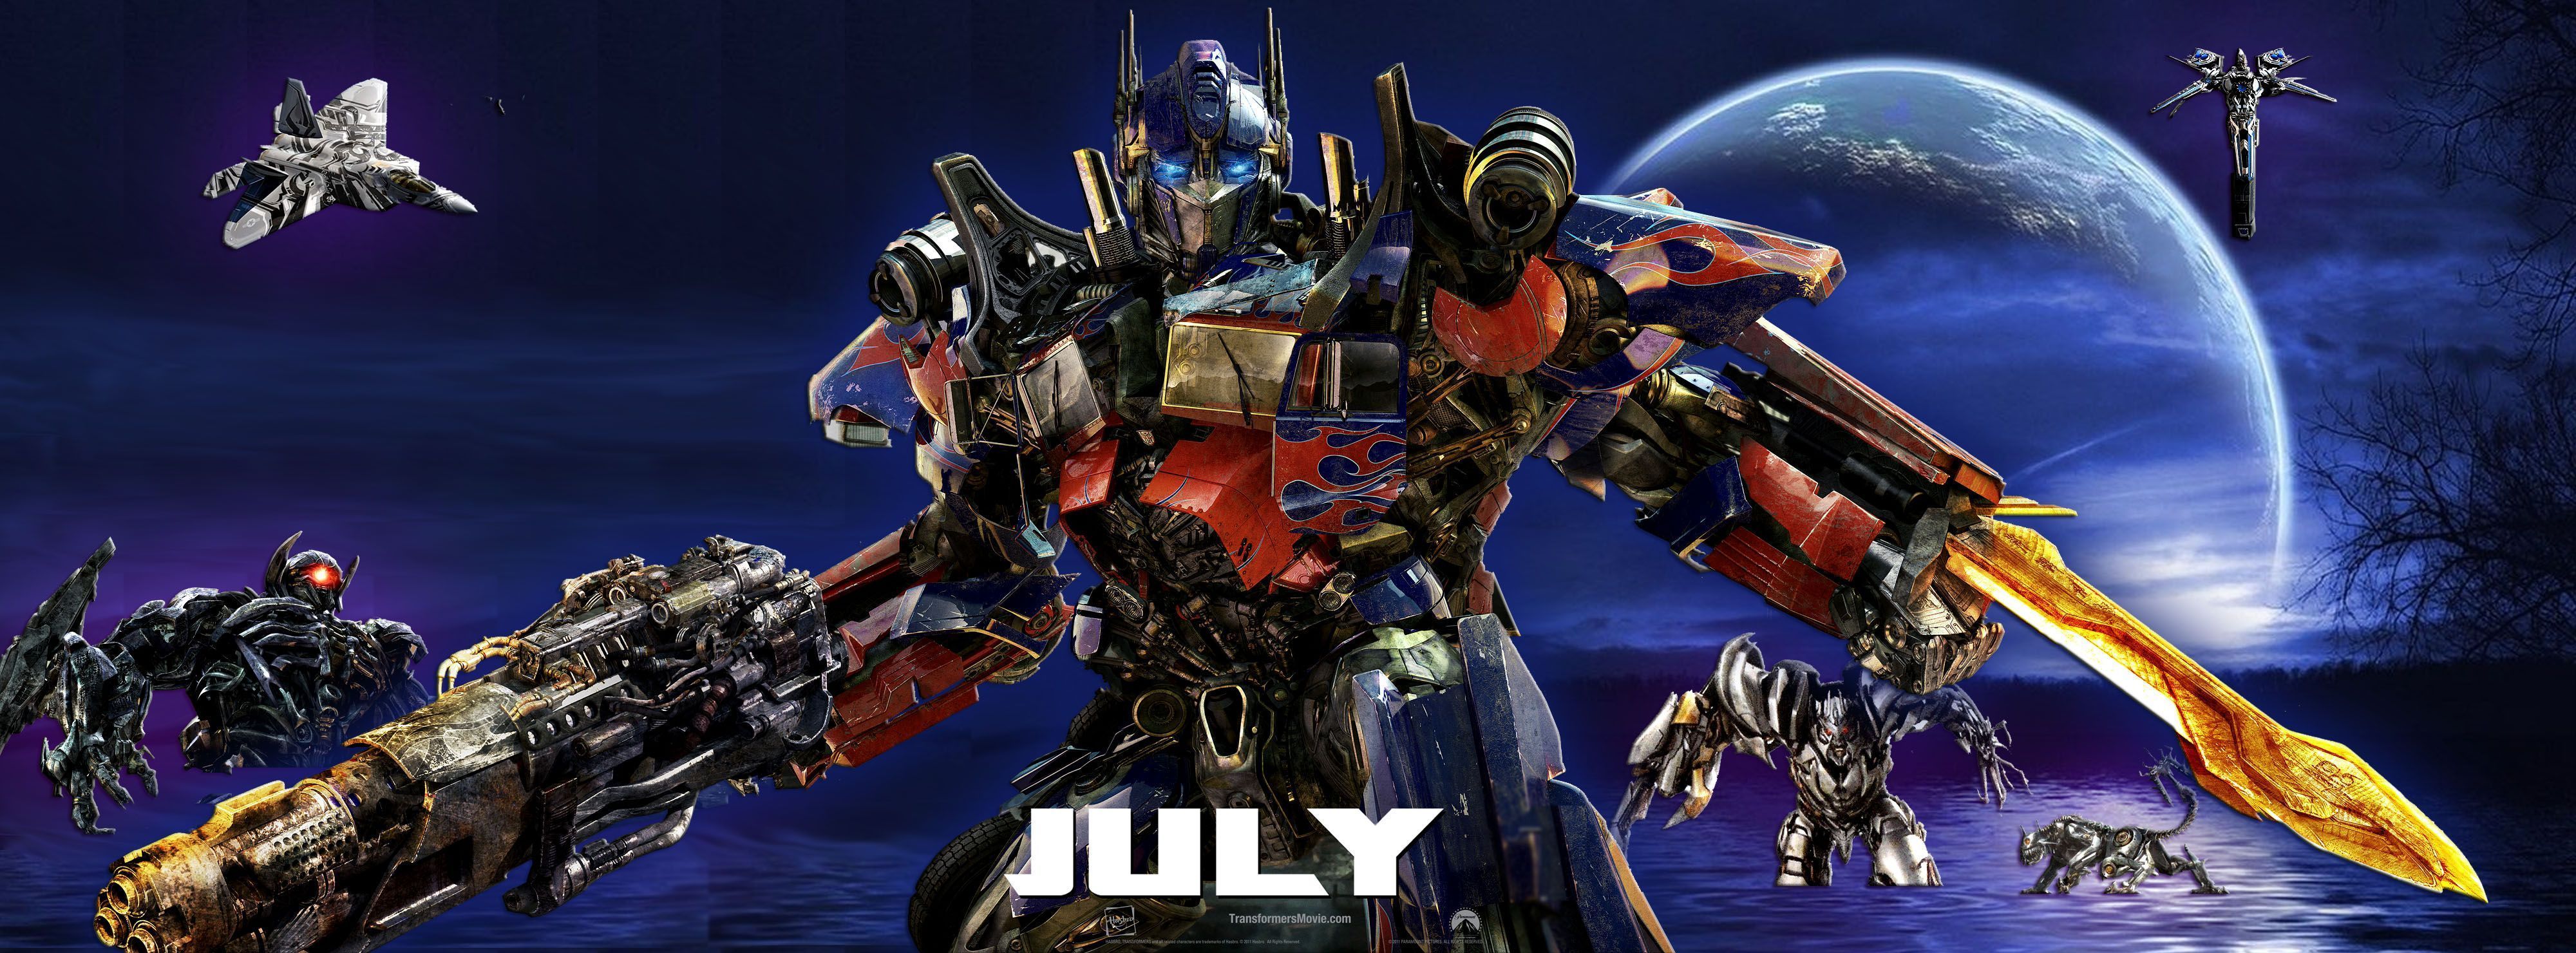 Transformers Poster - TFW2005.com